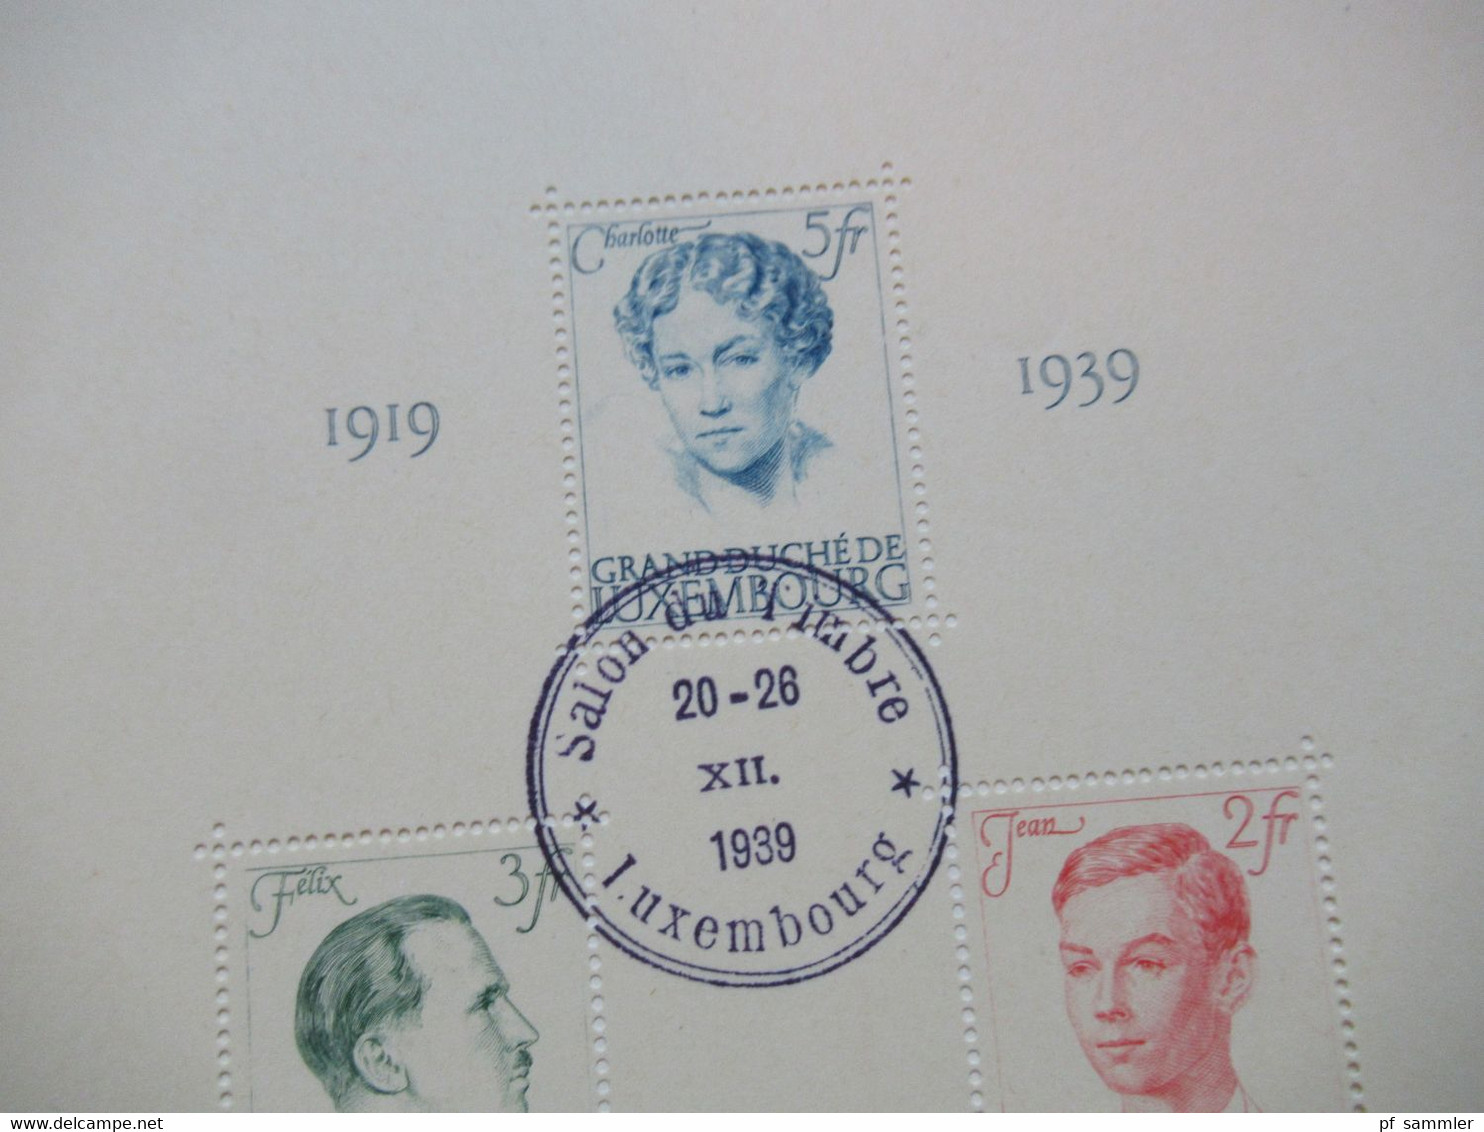 Luxemburg 1939 Sonderblatt / Souvenir Sheet Salon du Timbre 1939 mit Block 3 mit Sonderstempel  Luxembourg